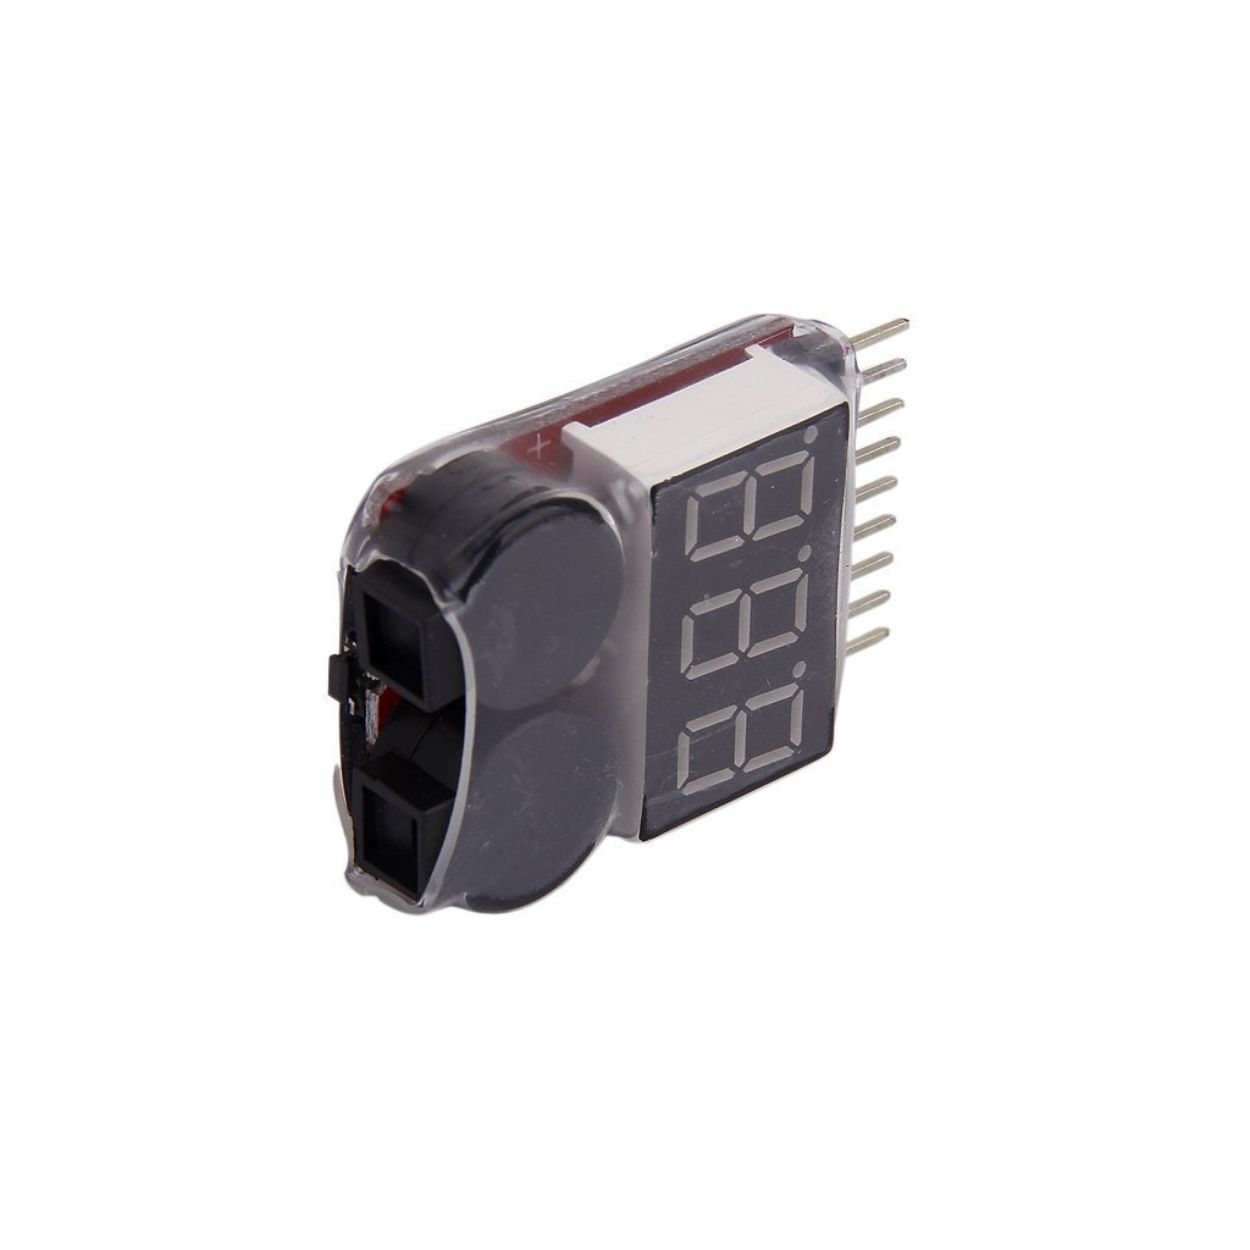 1-8S Lipo / Li-ion Battery Voltage Tester 2IN1 Low Voltage Buzzer Alarm